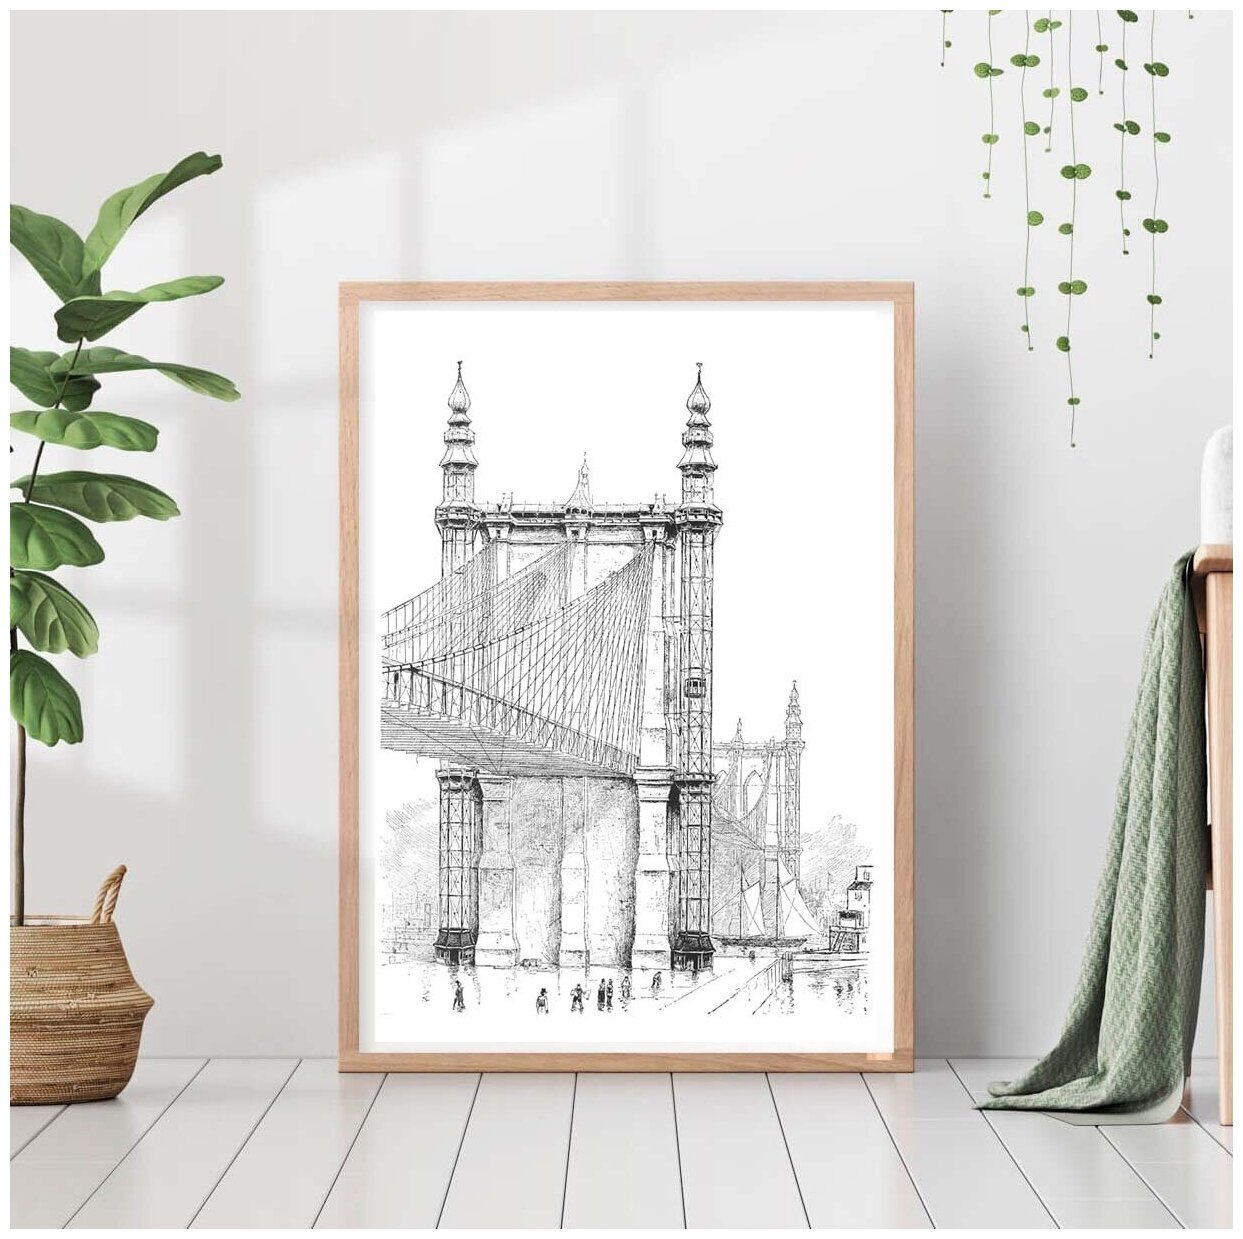 Постер без рамки "Архитектура Бруклинский мост" 30 на 40 в тубусе / Картина для интерьера / Плакат / Постер на стену / Интерьерные картины